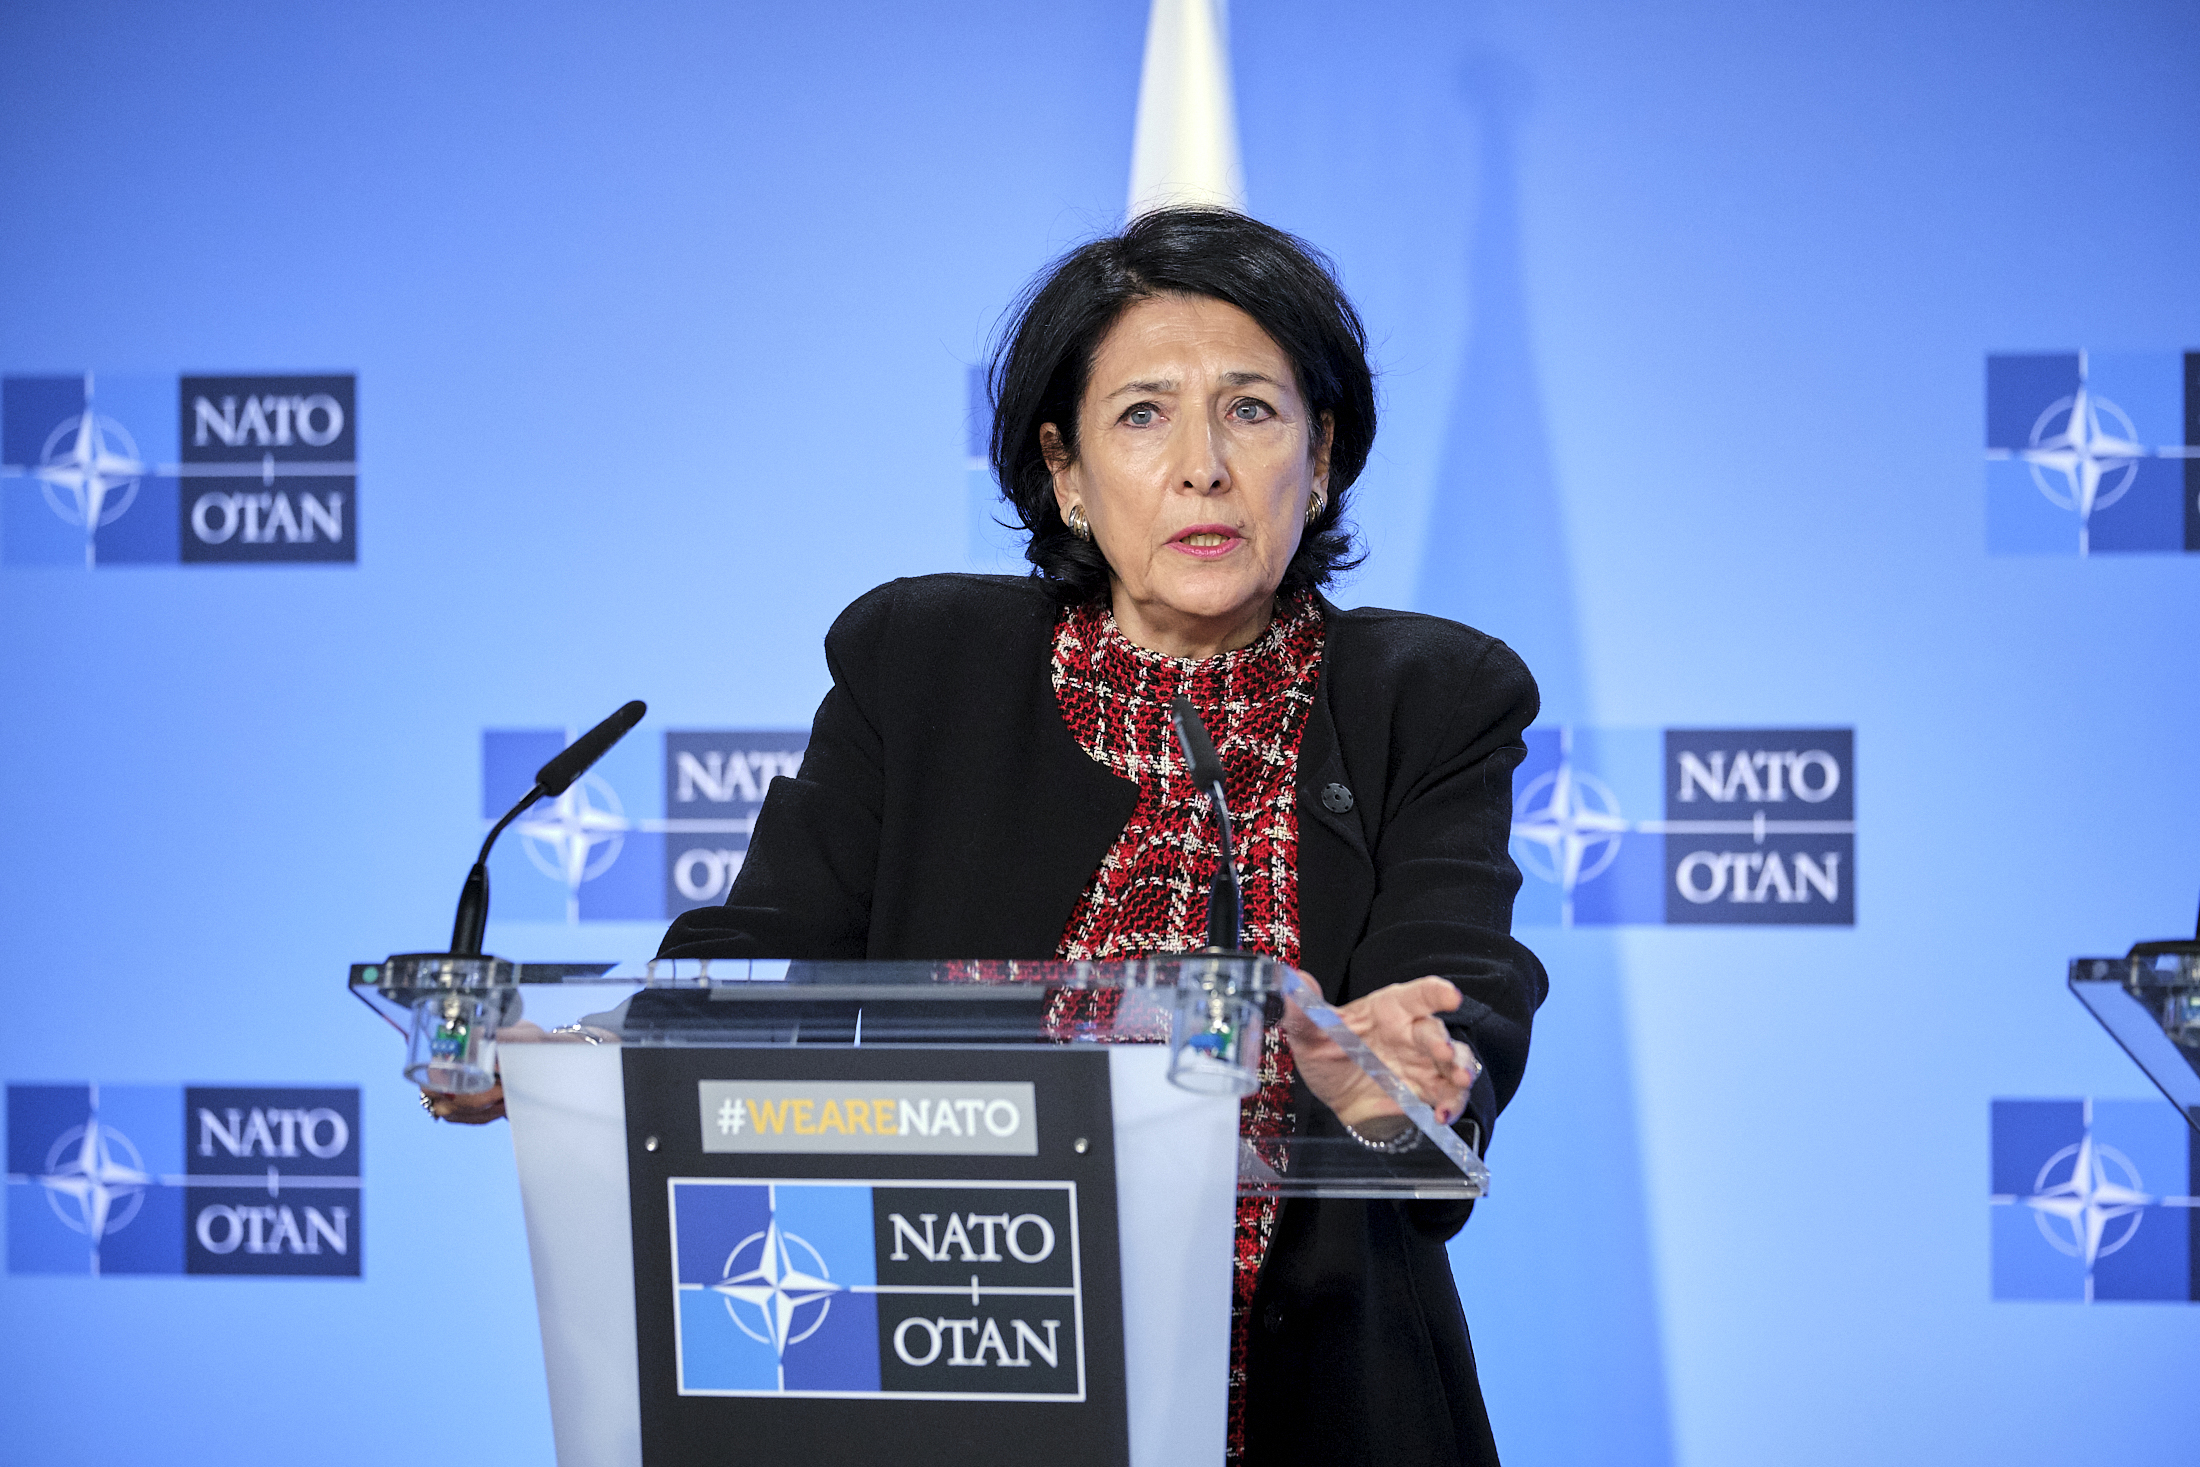 President Salome Zourabichvili of Georgia (photo credit: NATO North Atlantic Treaty Organization/flickr)